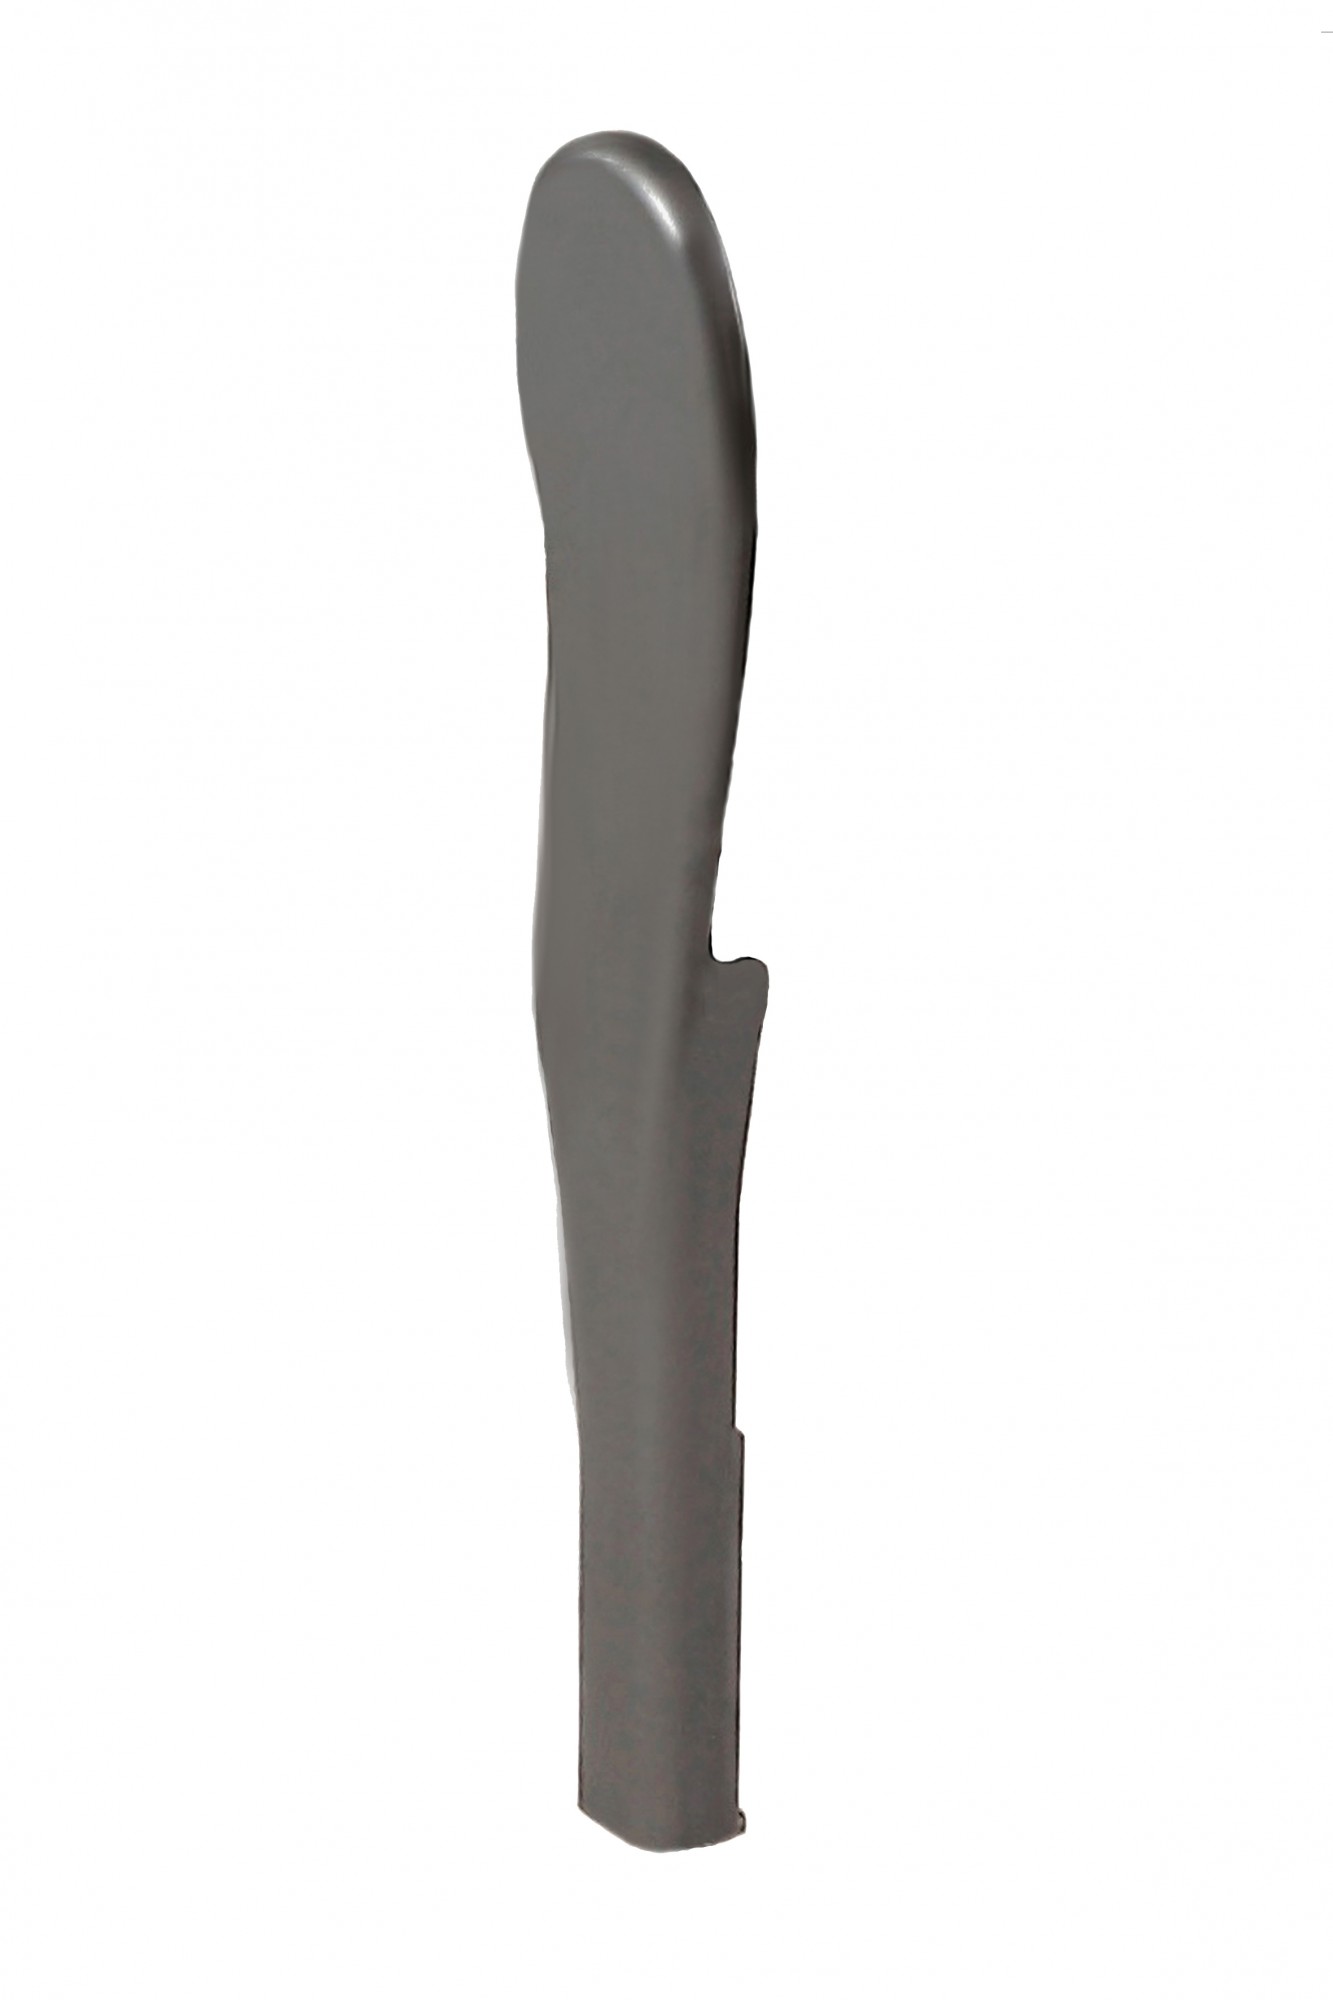 692 Standard (8cm) to High Leg (13 cm) extension Kit